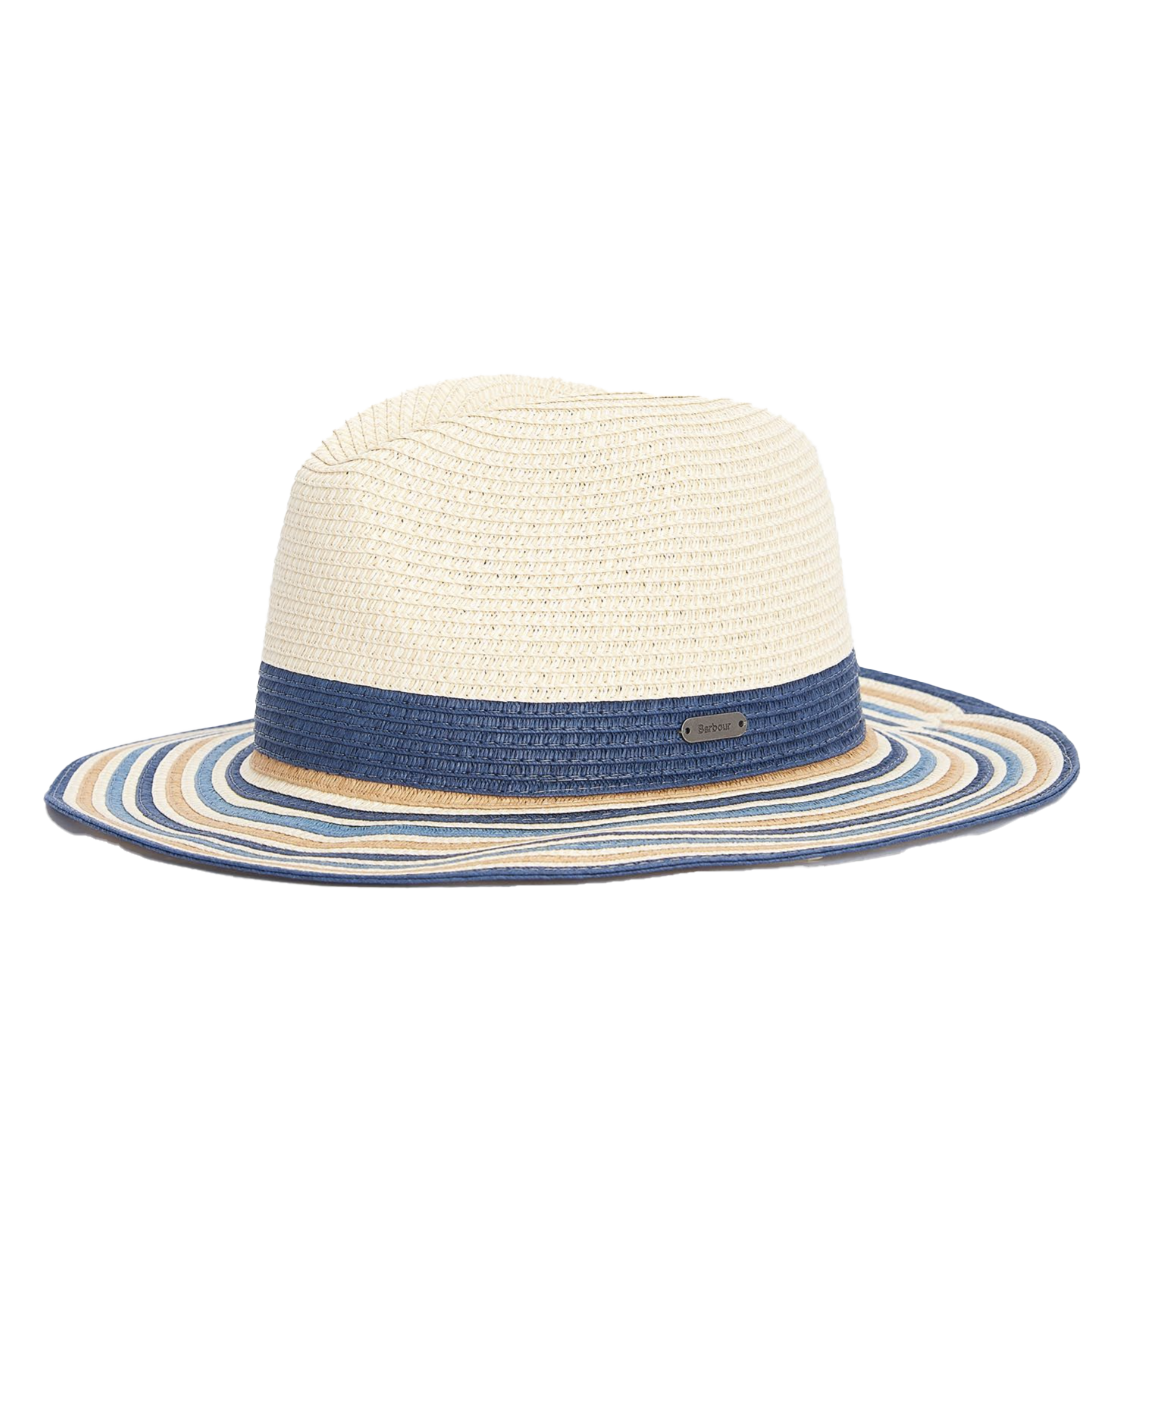 Ws Amelda Fedora Summer Hat Nat.Navy